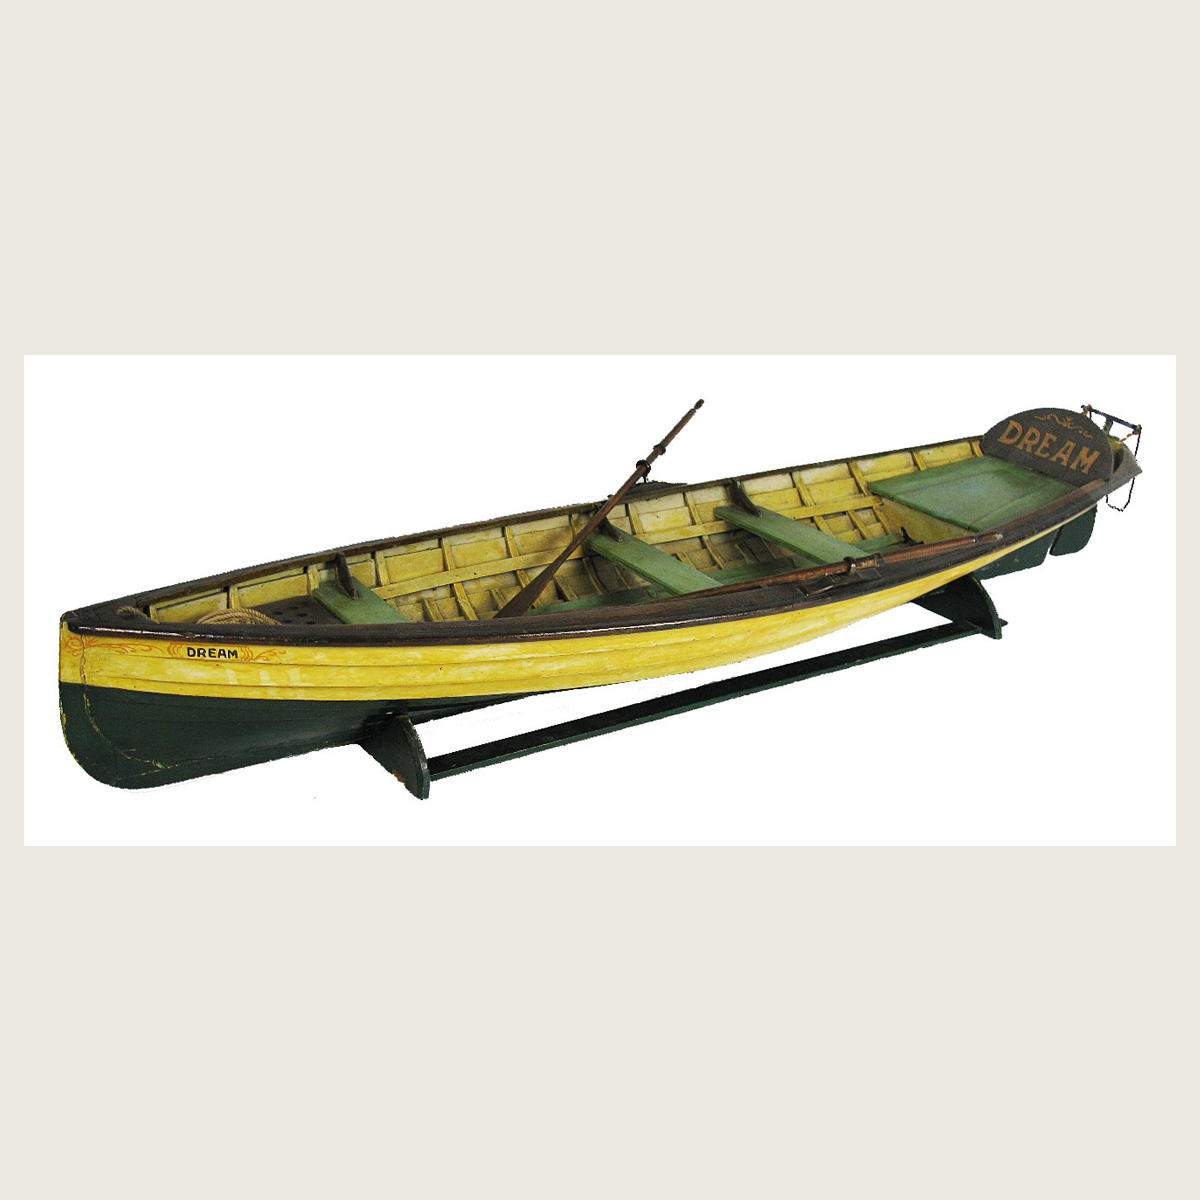 "Dream" Boat Model